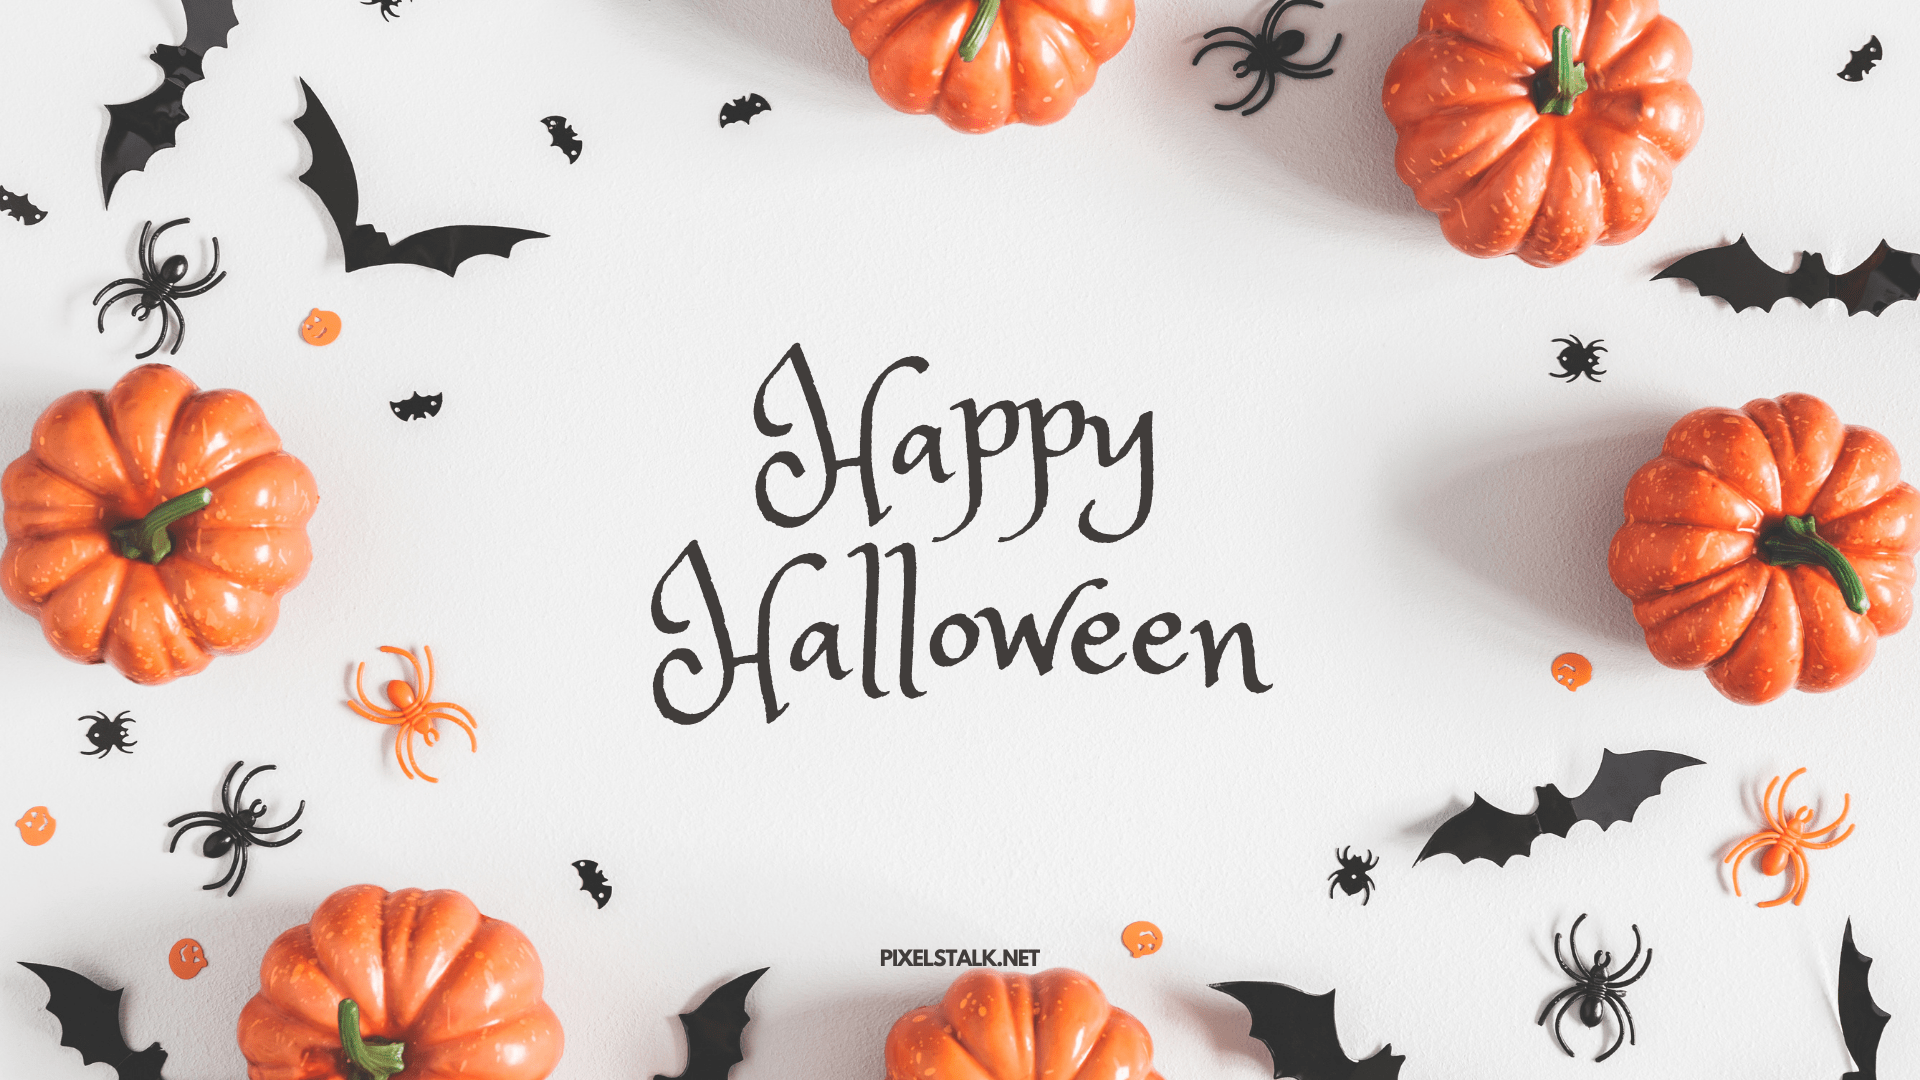 Happy halloween greeting card with pumpkins and bats - Halloween, cute Halloween